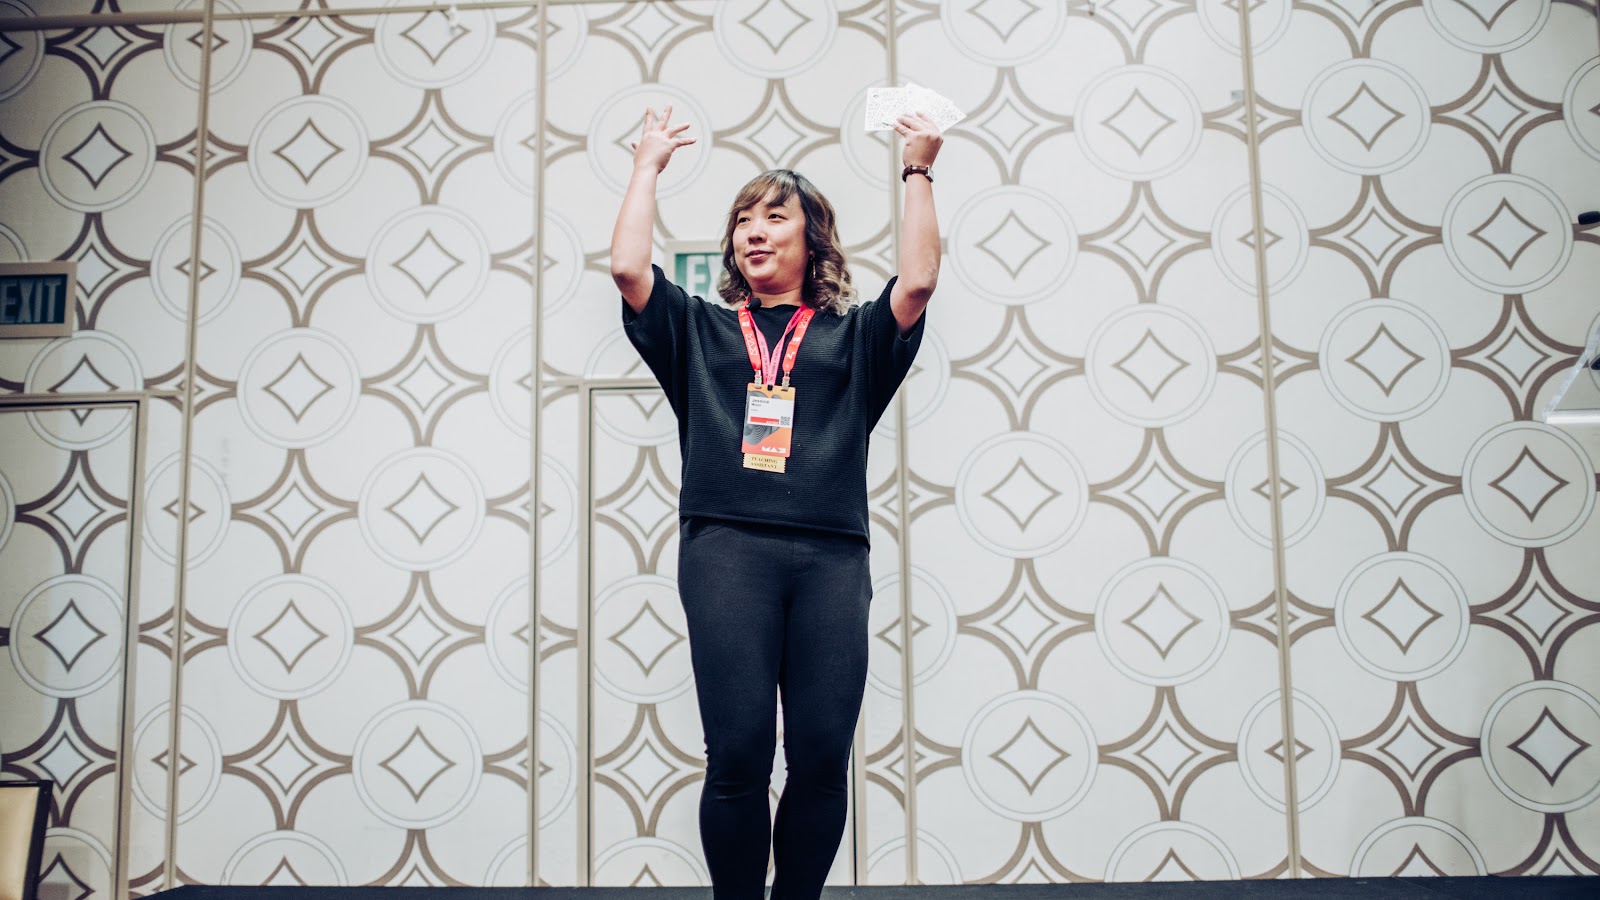 Adobe XD Senior Design Manager, Jessica Moon, kicks things off at Adobe MAX 2019's XD Summit.